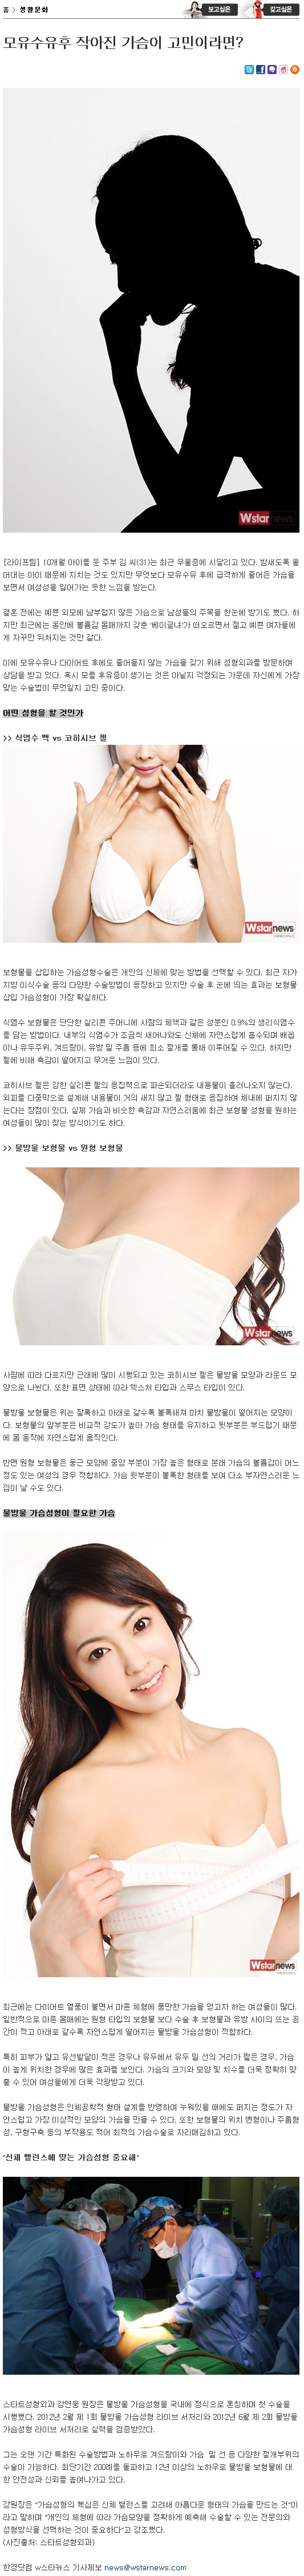 hankyung_com_20140124_163721.jpg